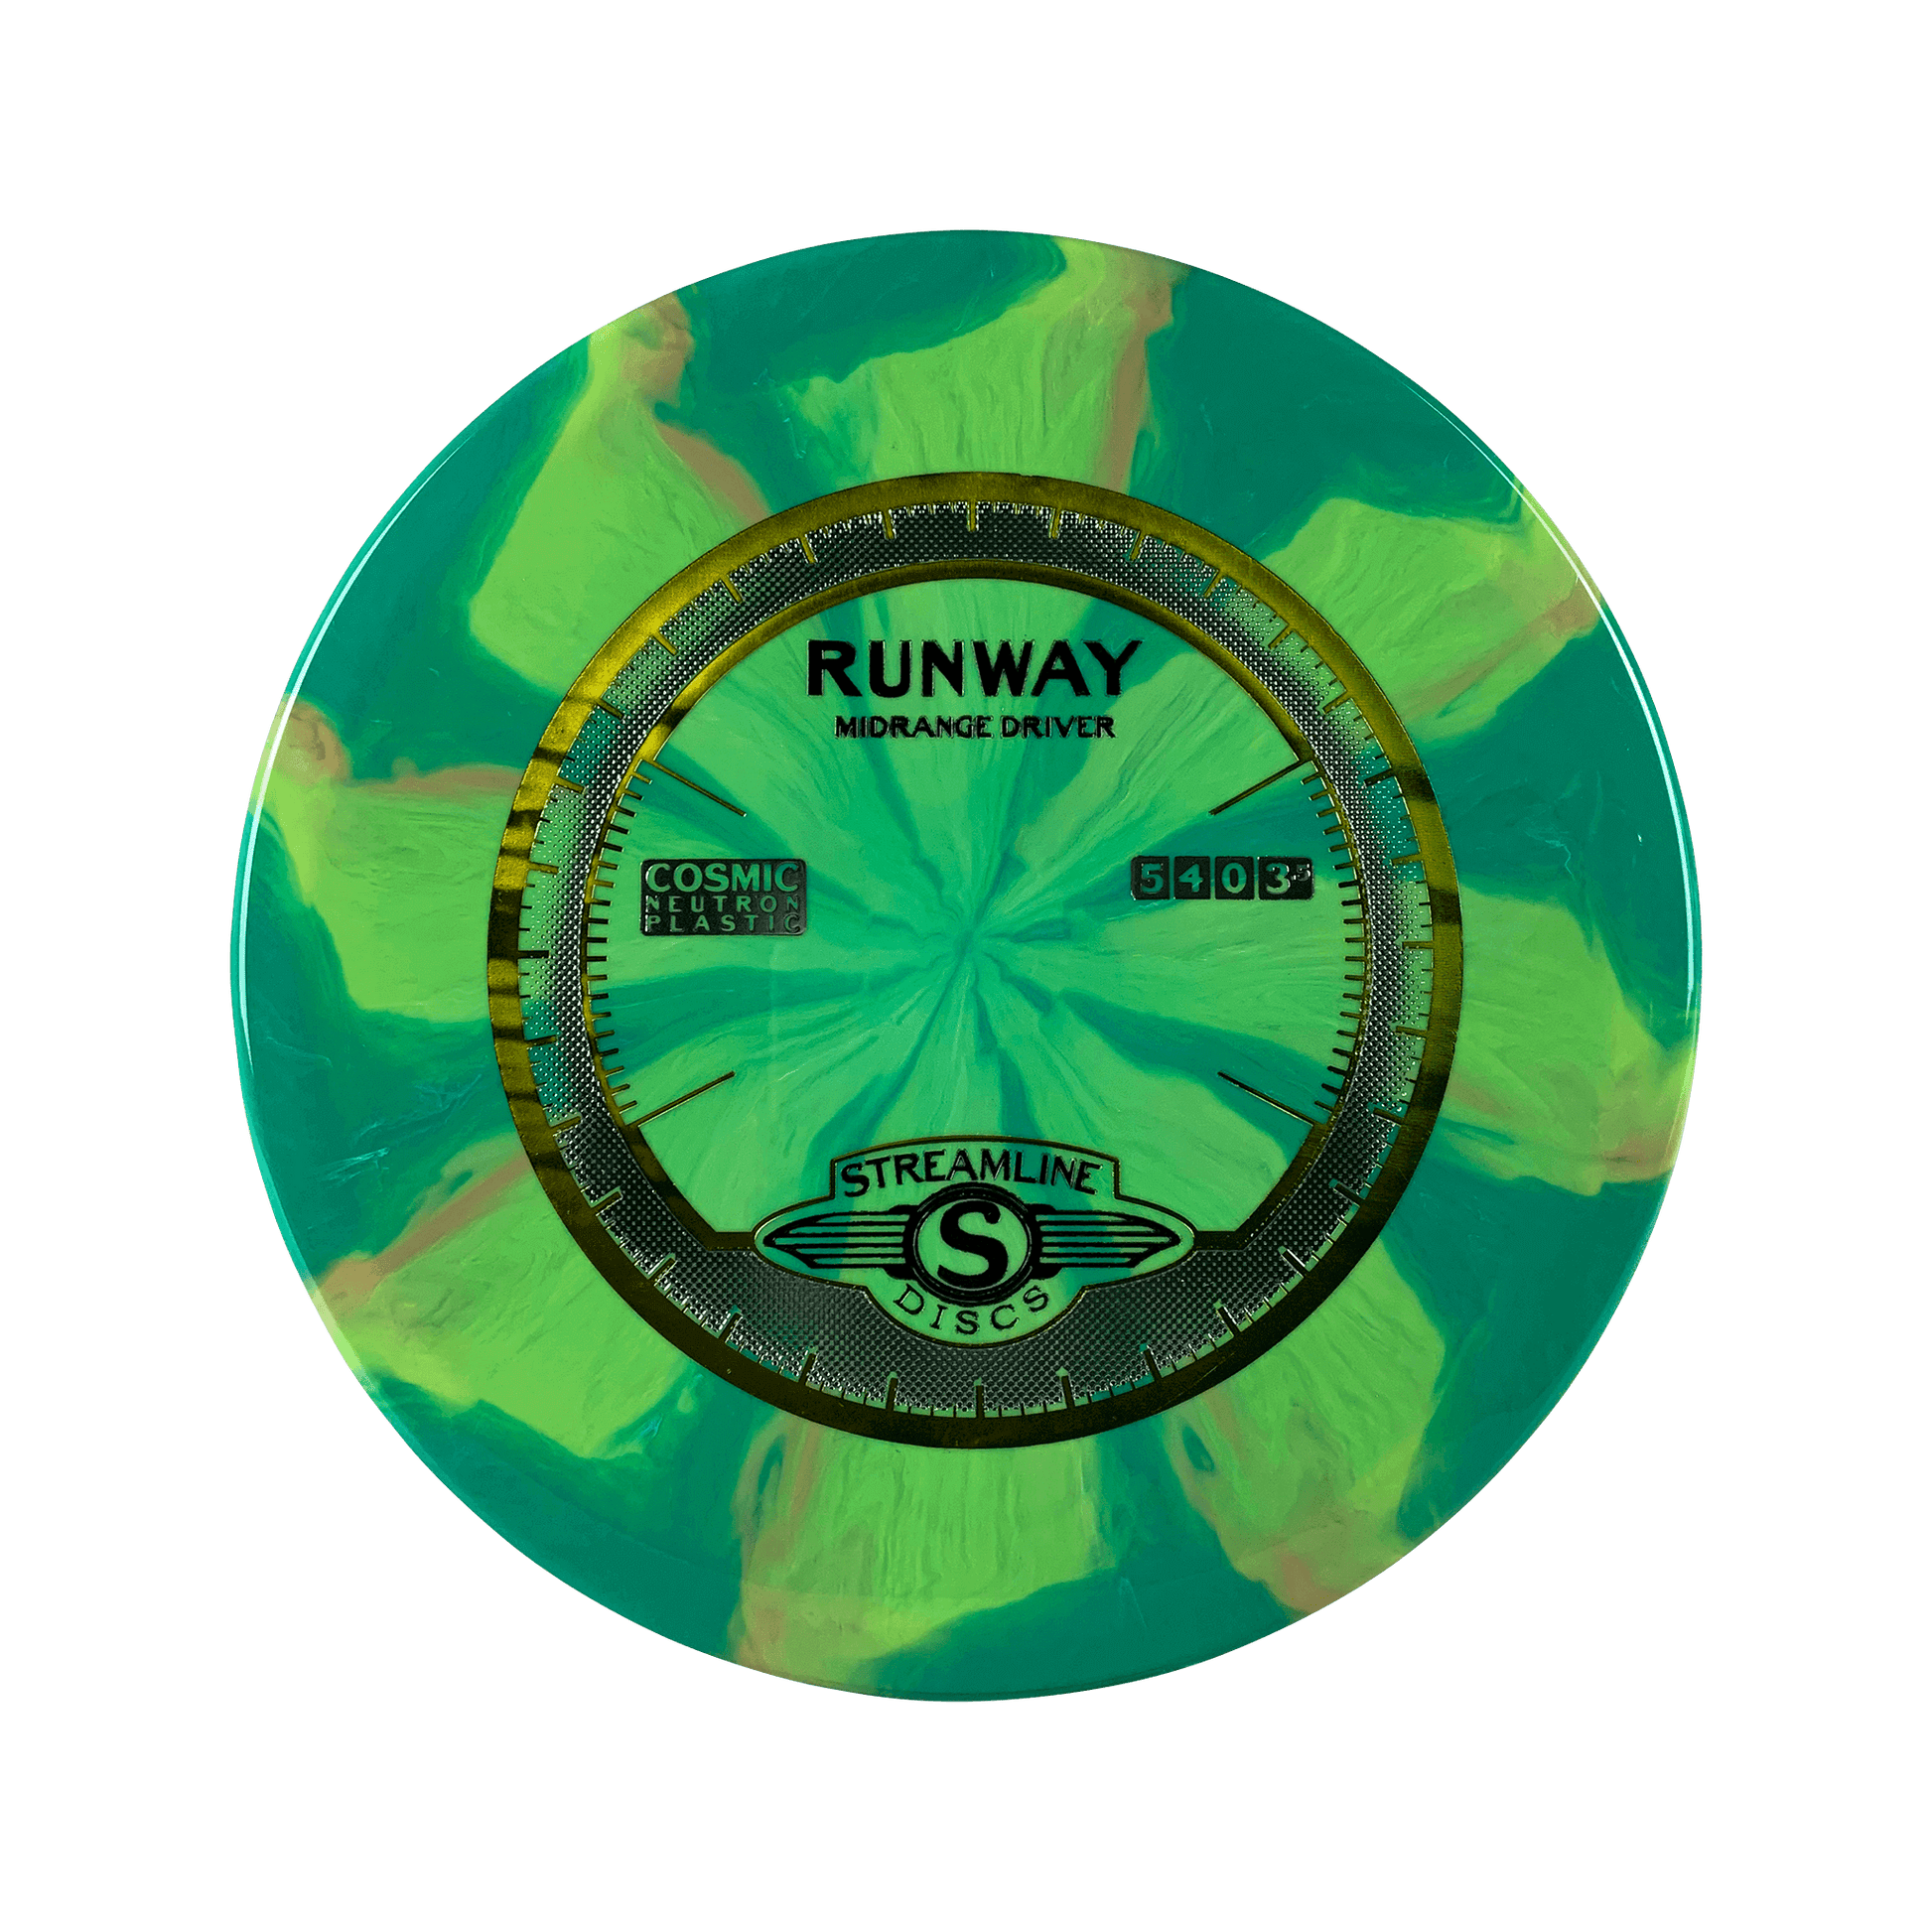 Cosmic Neutron Runway Disc Streamline multi / green 176 